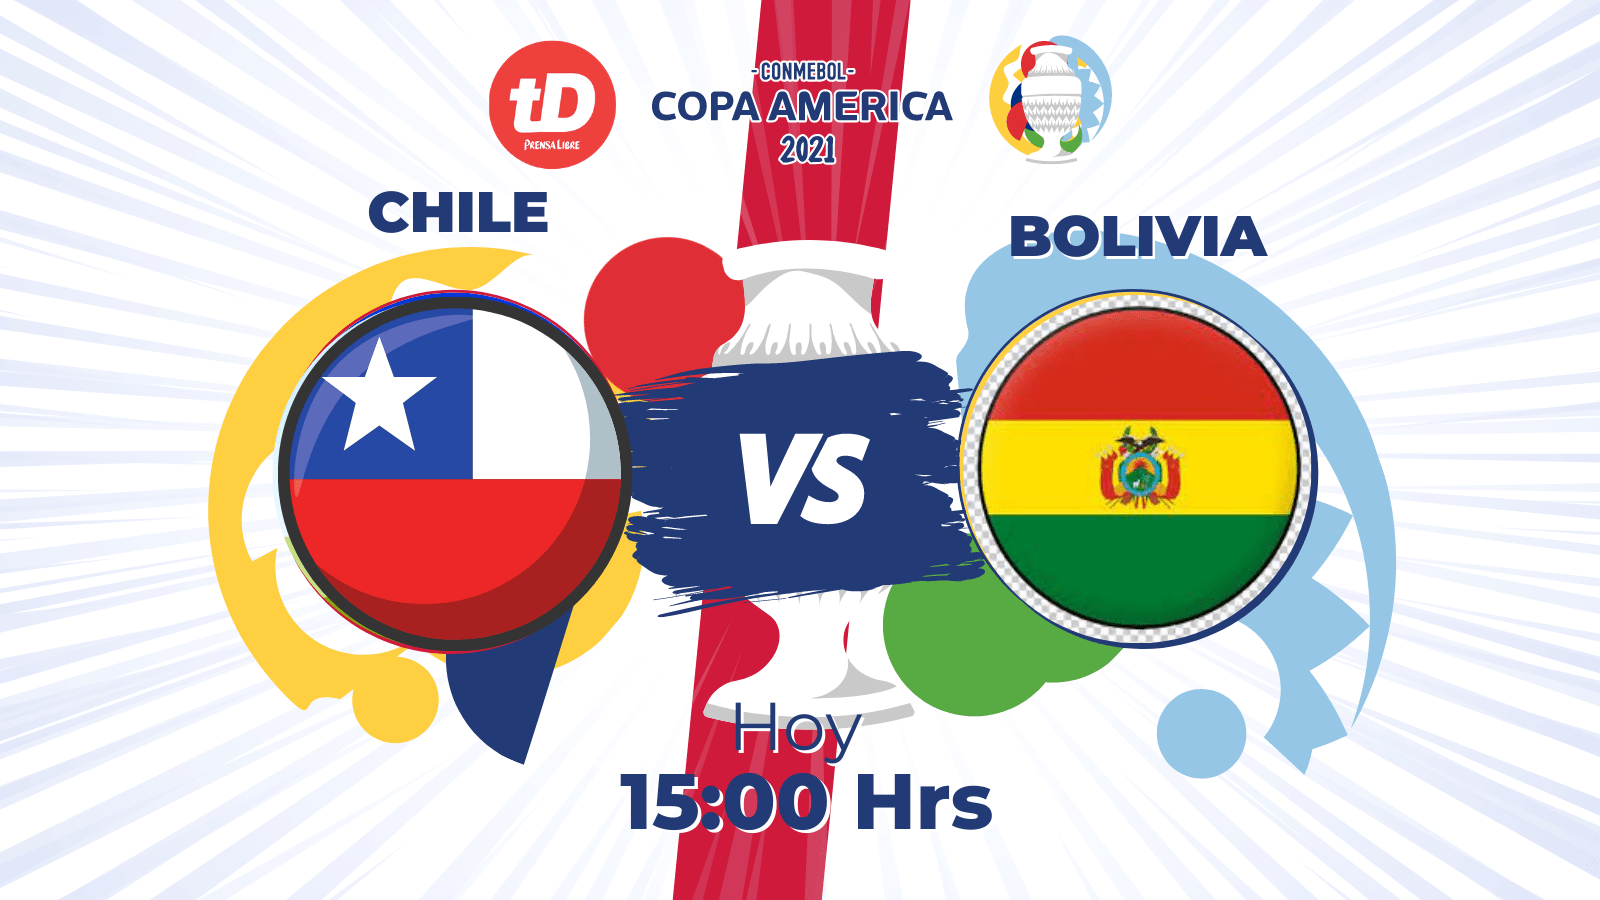 Chile - Bolivia / Con sufrimiento incluido, Chile venció con lo mínimo a Bolivia - Bolivia football match, goals scored, goals conceded, clean sheets, btts and more.